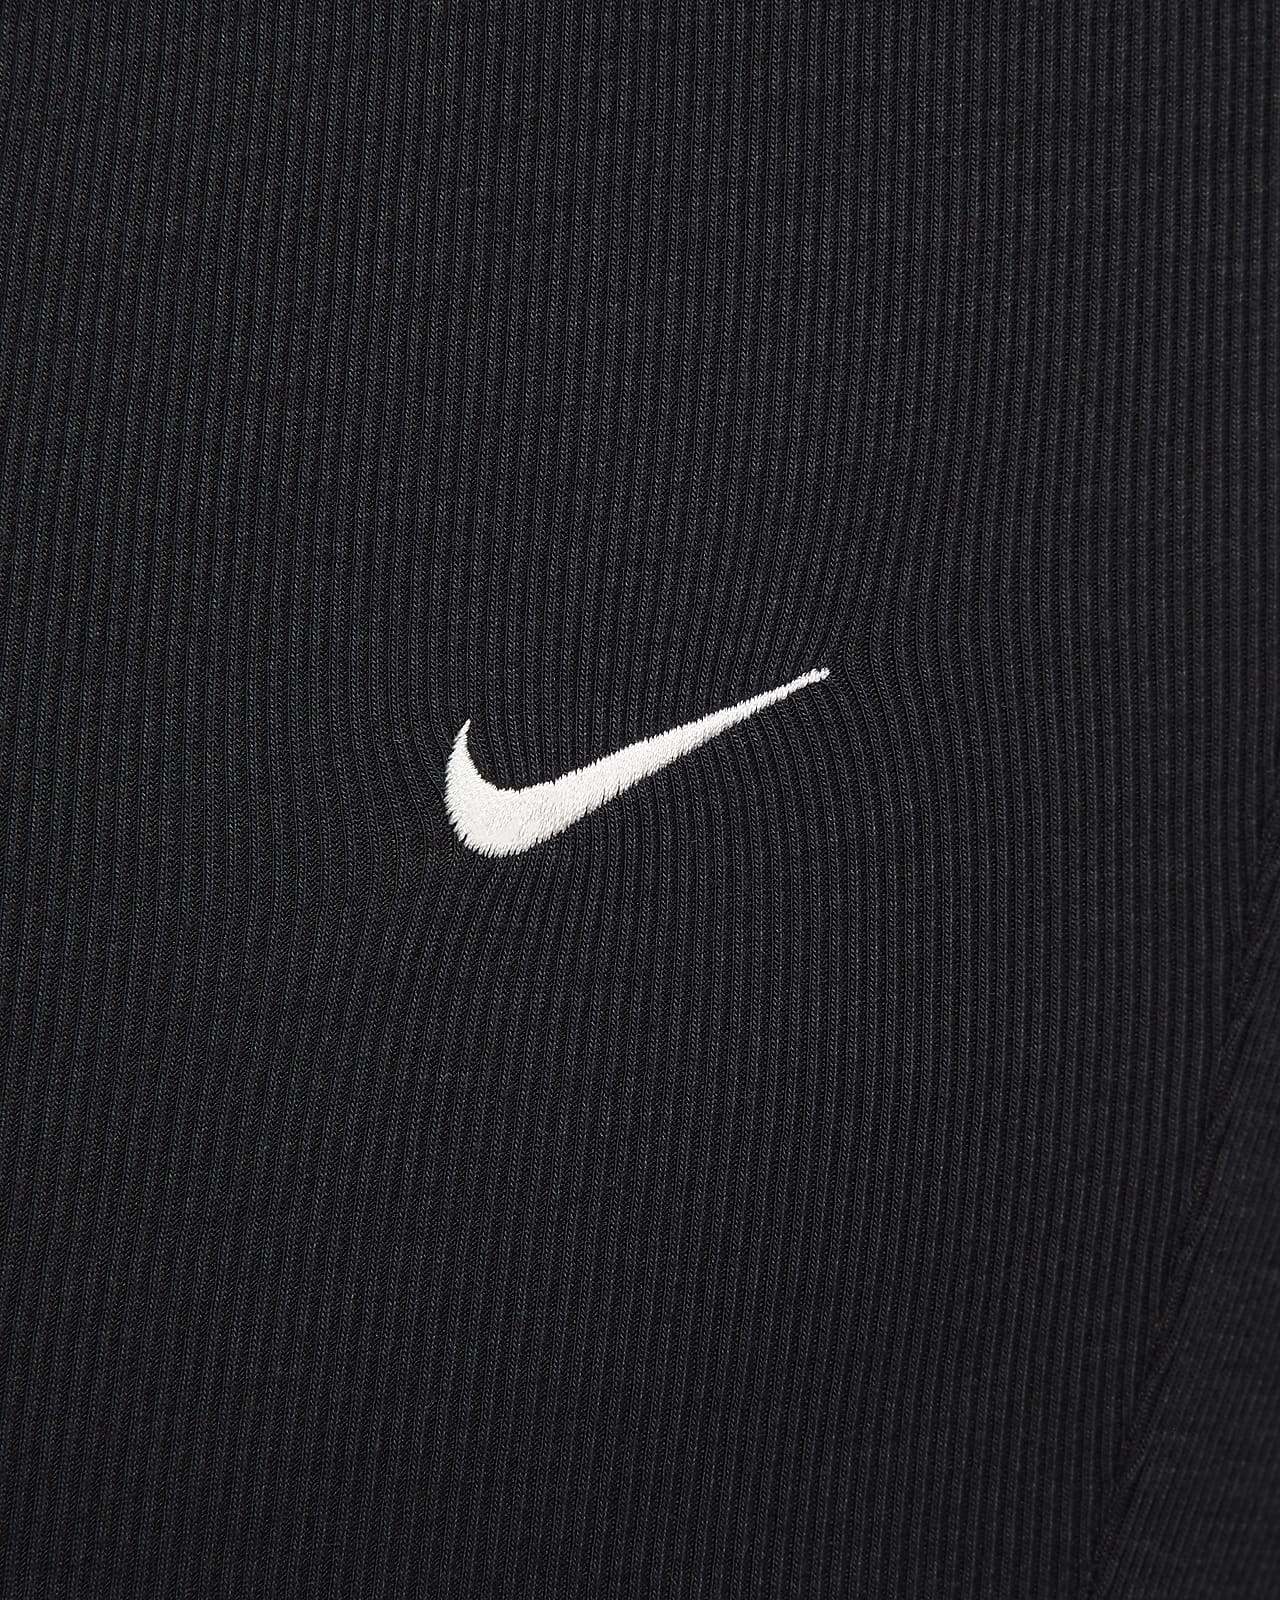 Nike 'Just Do It' leggings black - Nike - Purchase on Ventis.